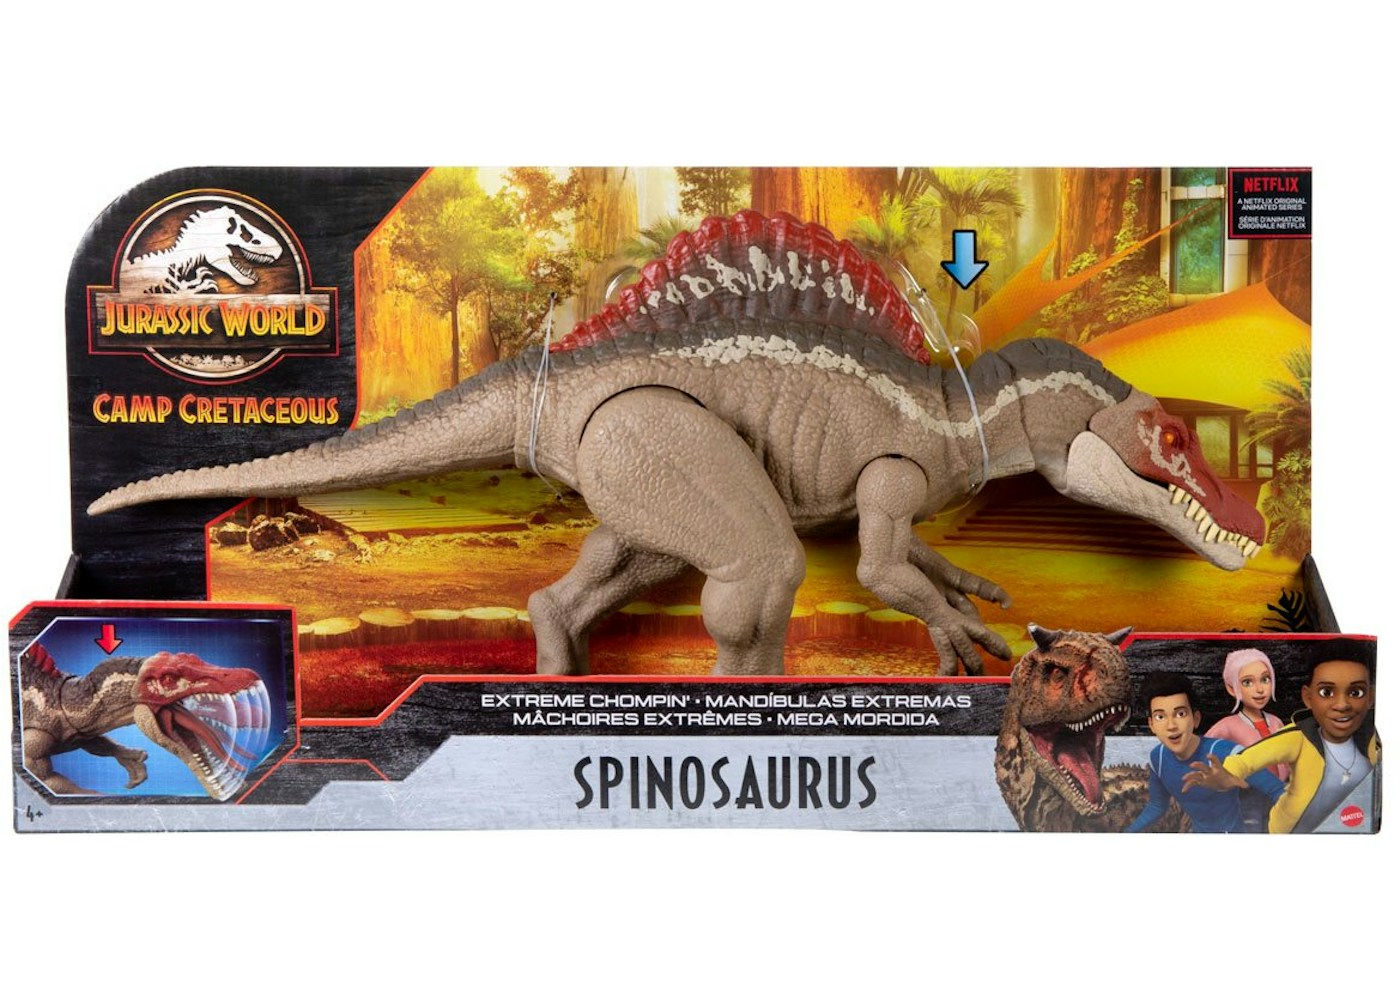 Jurassic World Extreme Chompin' Spinosaurus Dinosaur Action Figure.